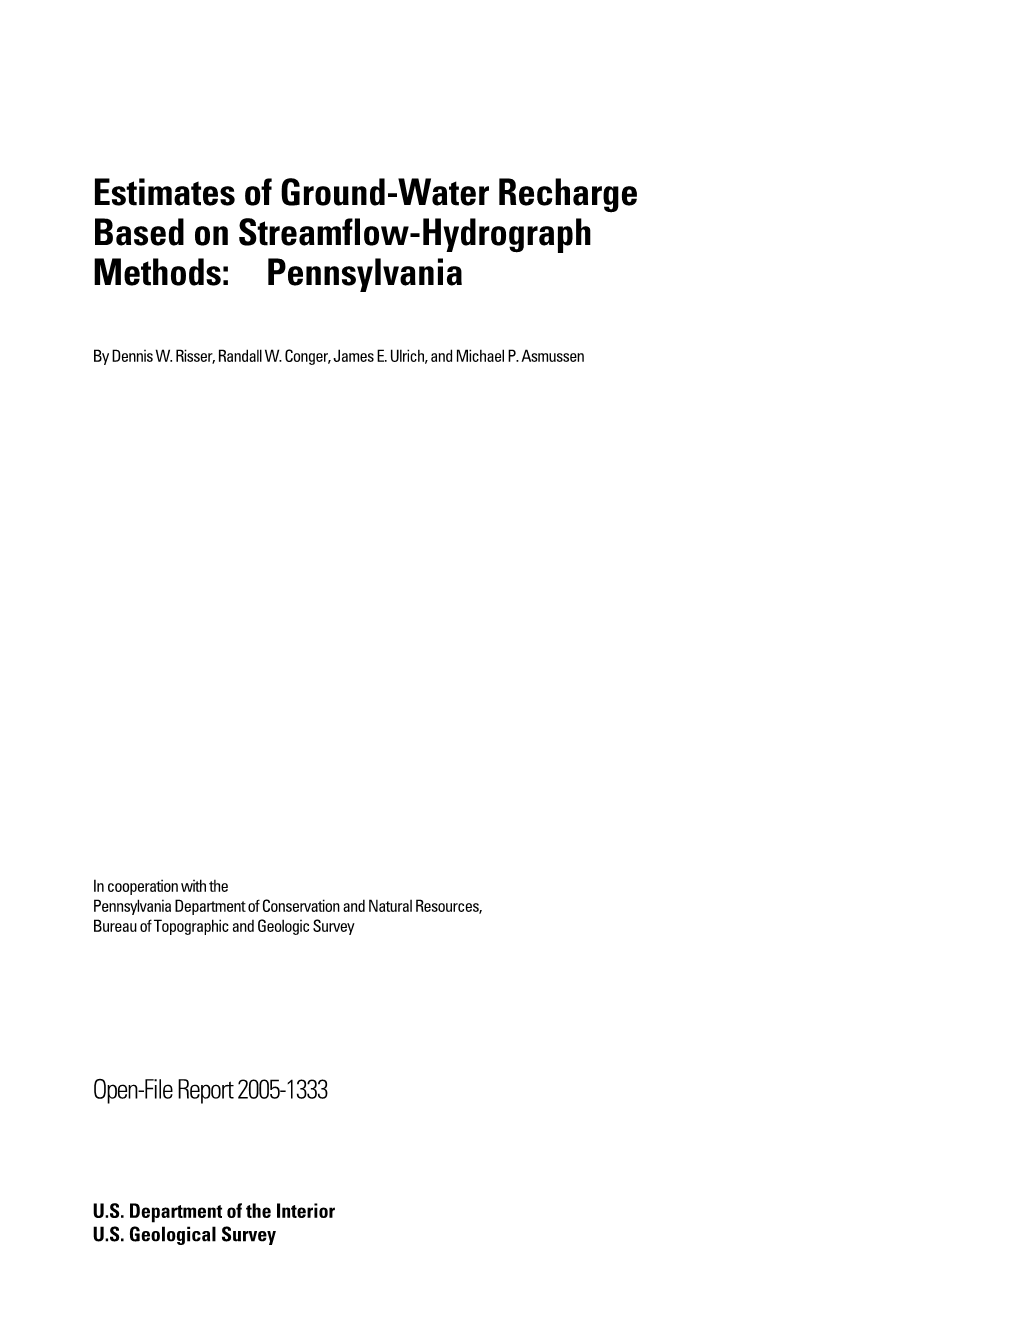 Estimates of Ground-Water Recharge Based on Streamflow-Hydrograph Methods: Pennsylvania